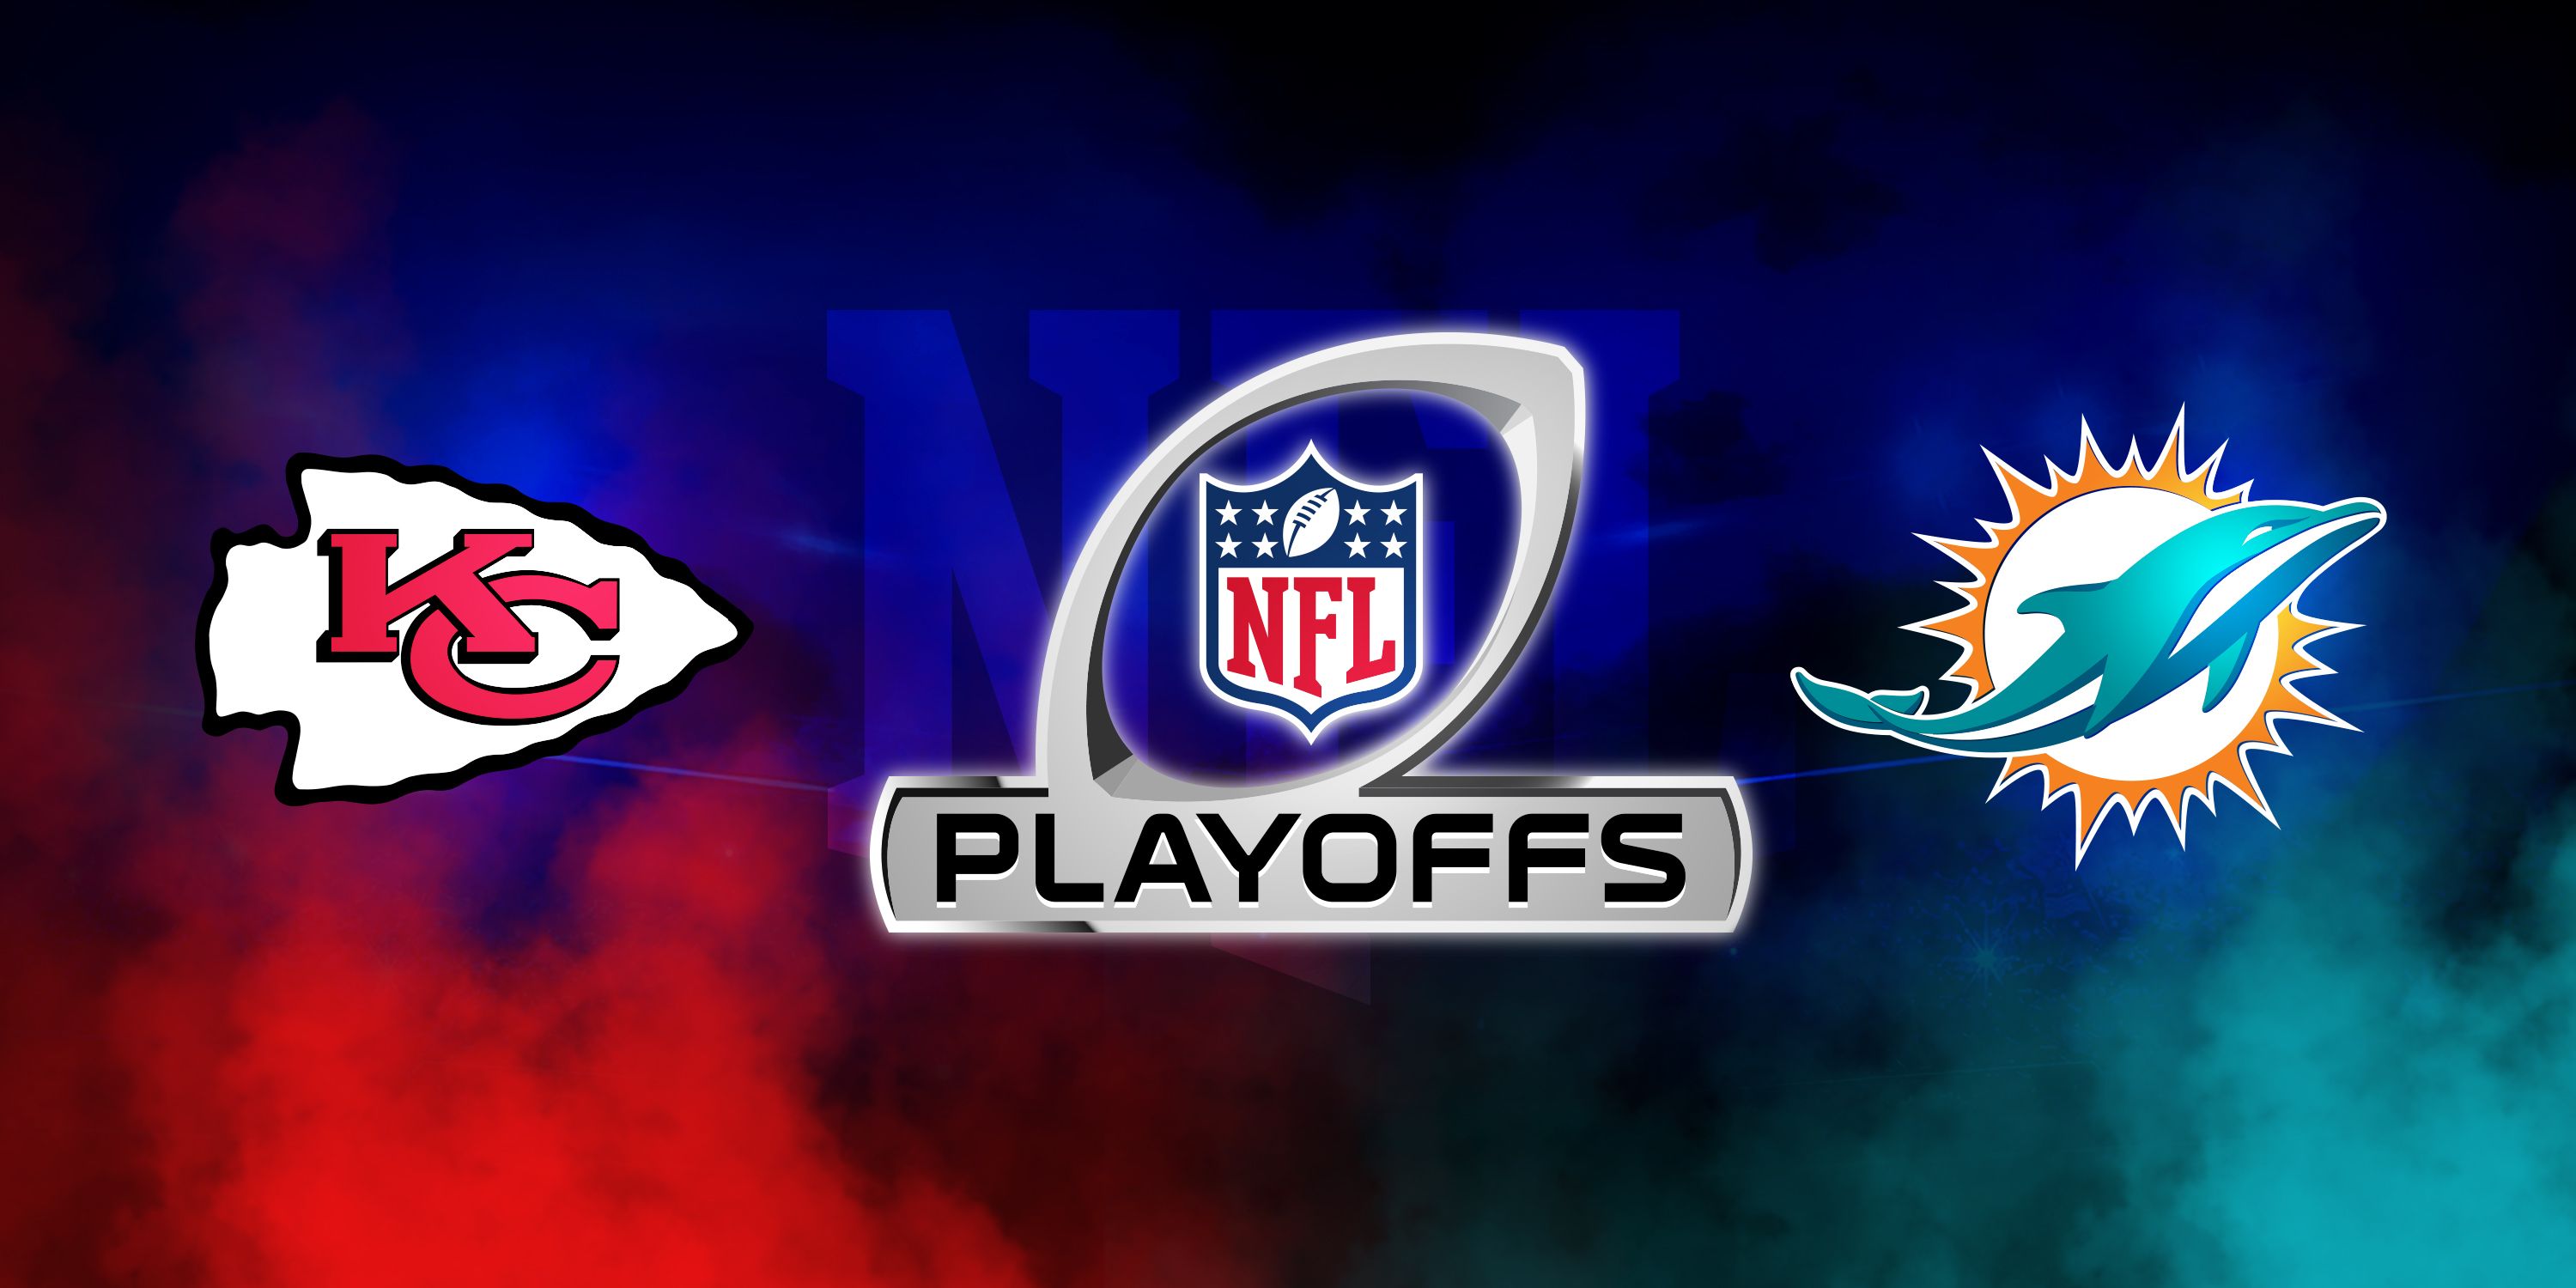 Kansas City Chiefs vs. Miami Dolphins NFL playoff preview